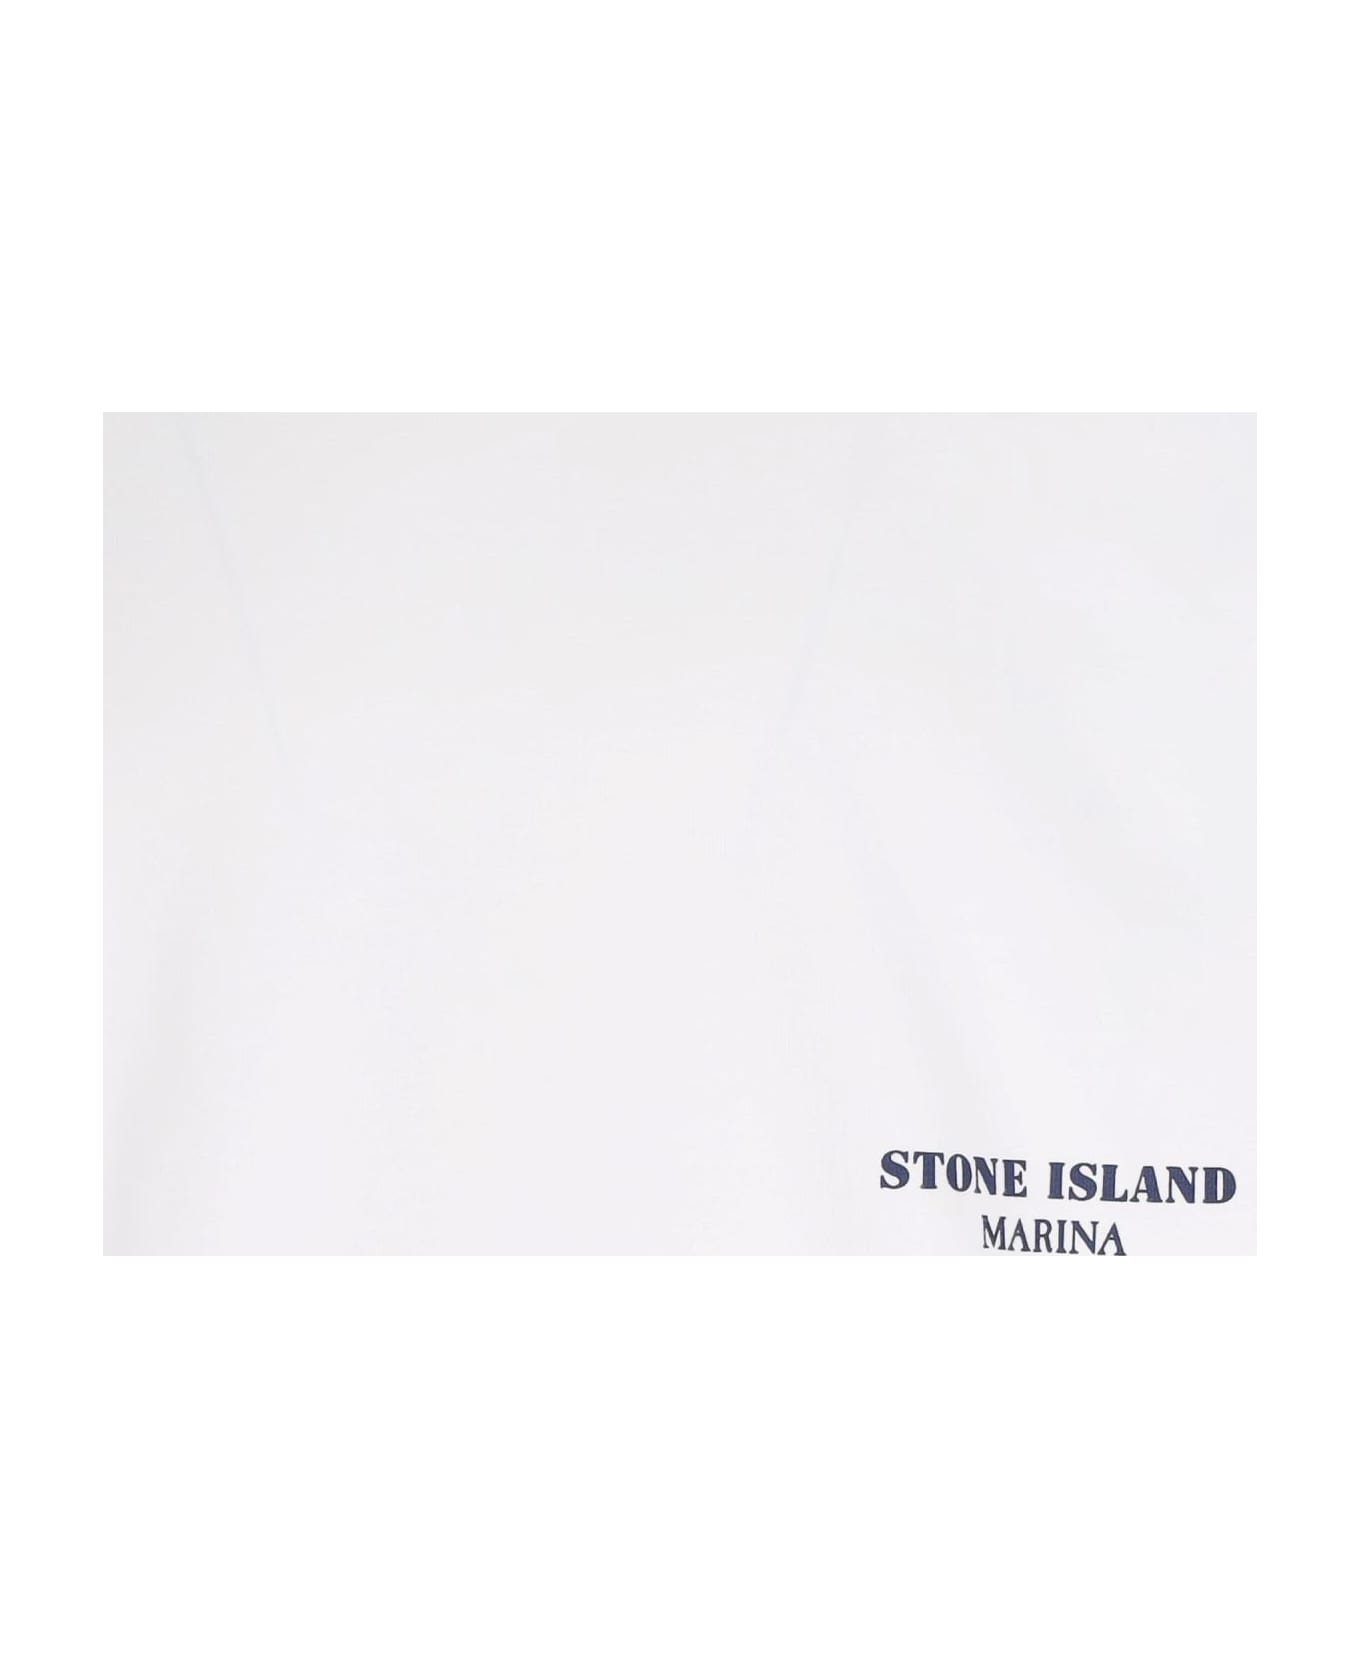 Stone Island 'marina' Crew Neck Sweatshirt